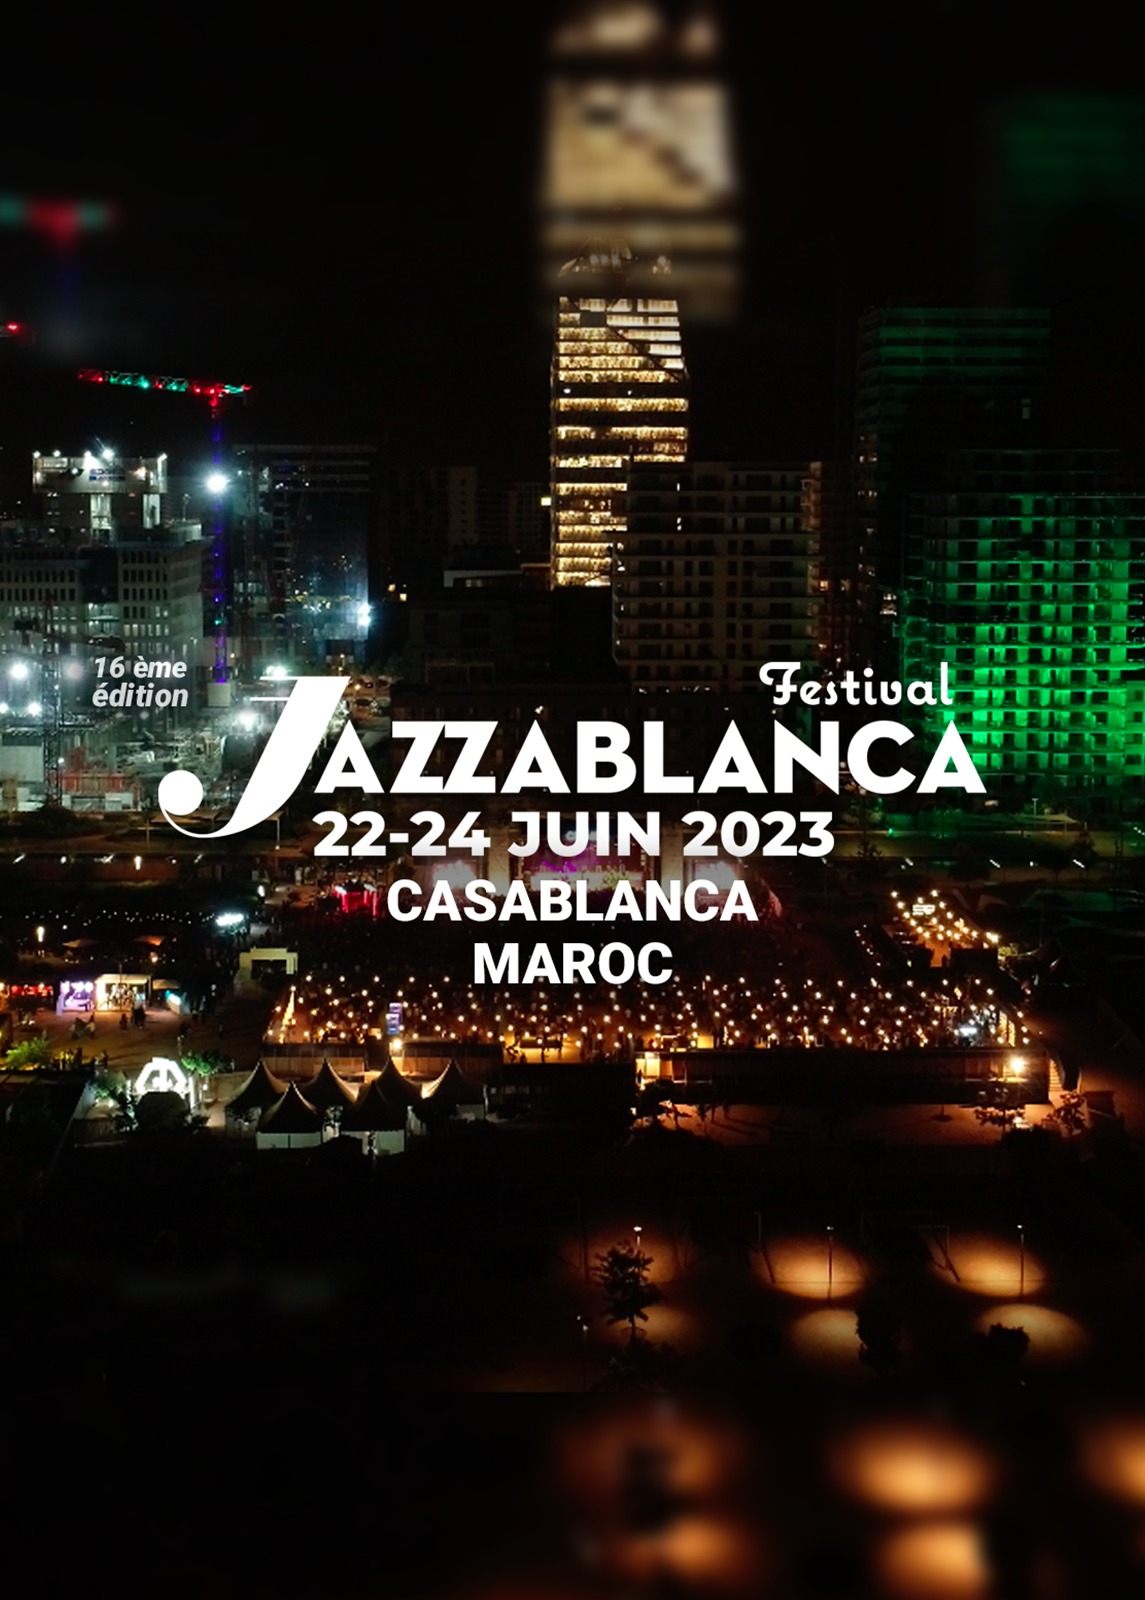 Jazzablanca, la 16e édition